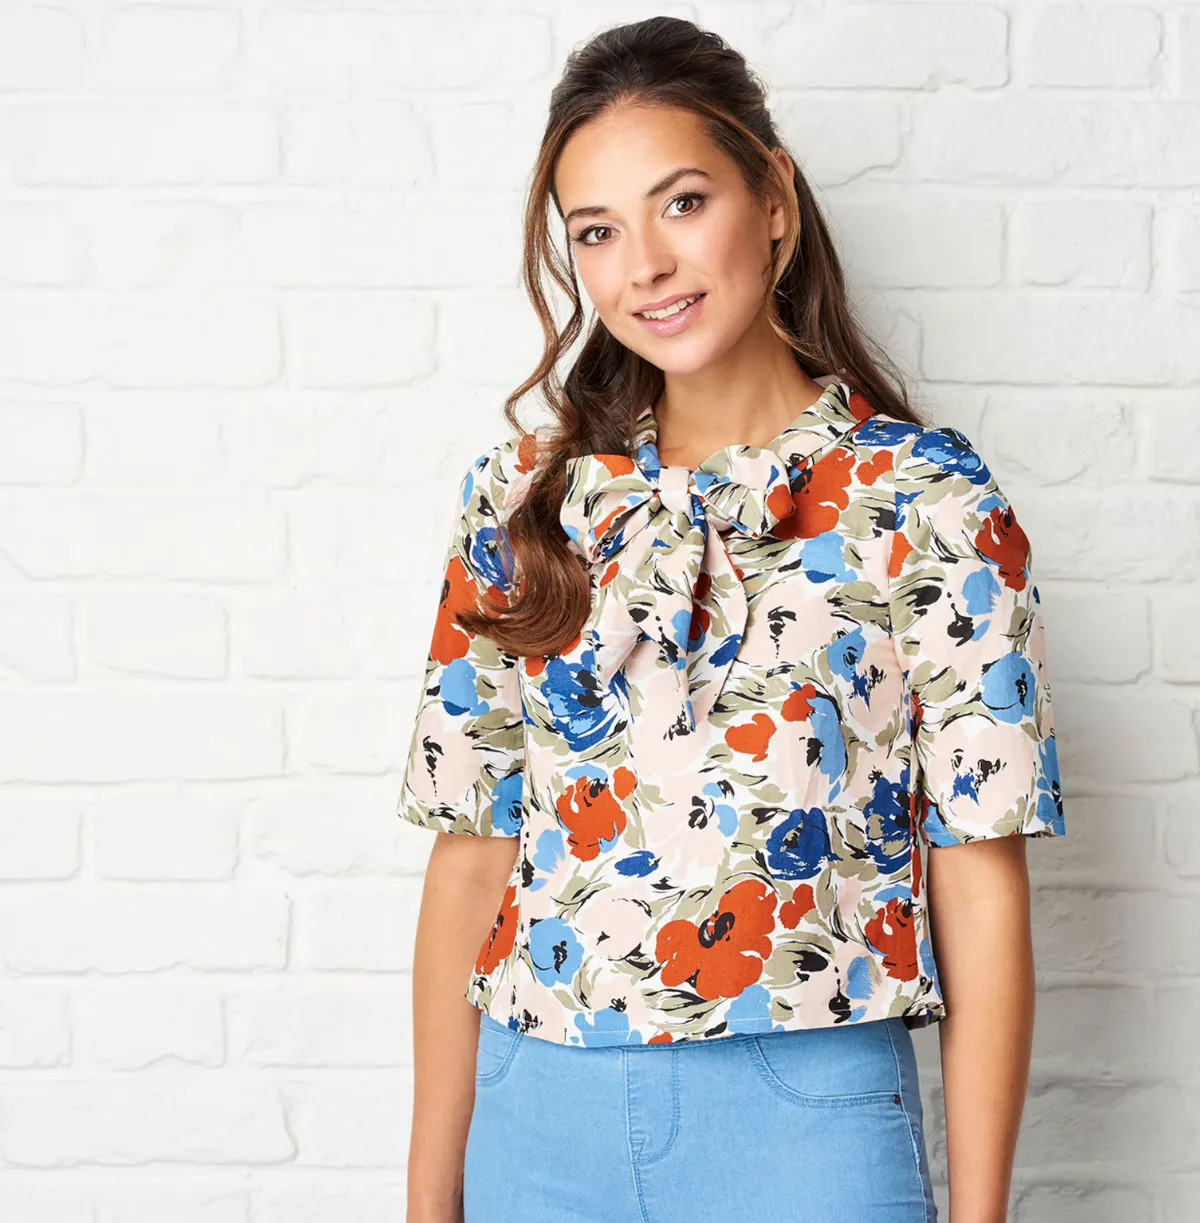 Blouse patterns – Bea blouse